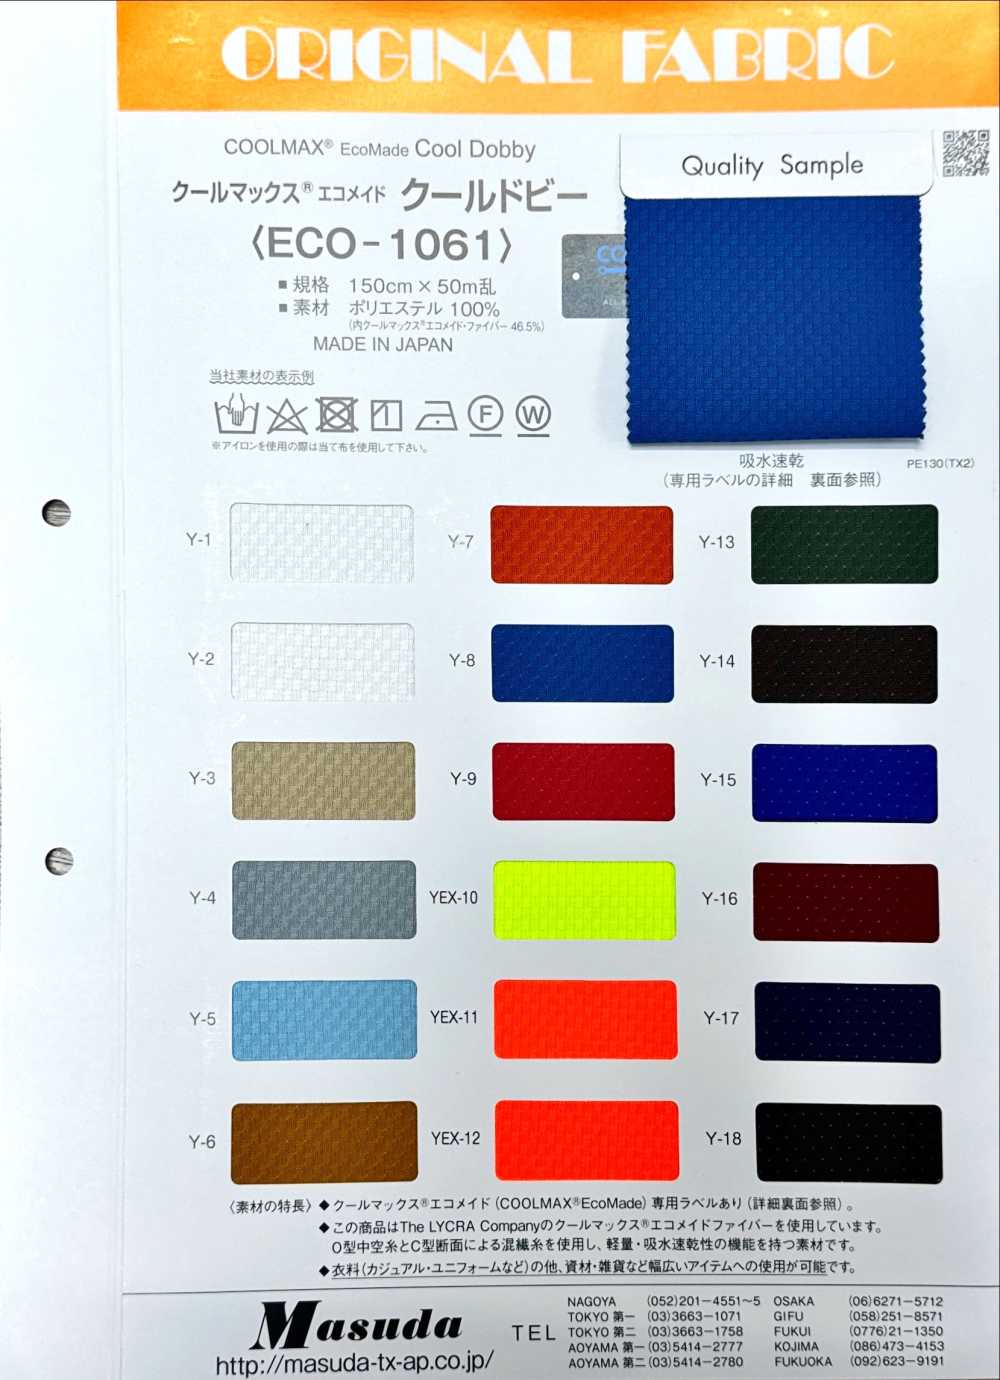 ECO-1061 Coolmax® Ecomade Cool Dobby[Fabrica Textil] Masuda